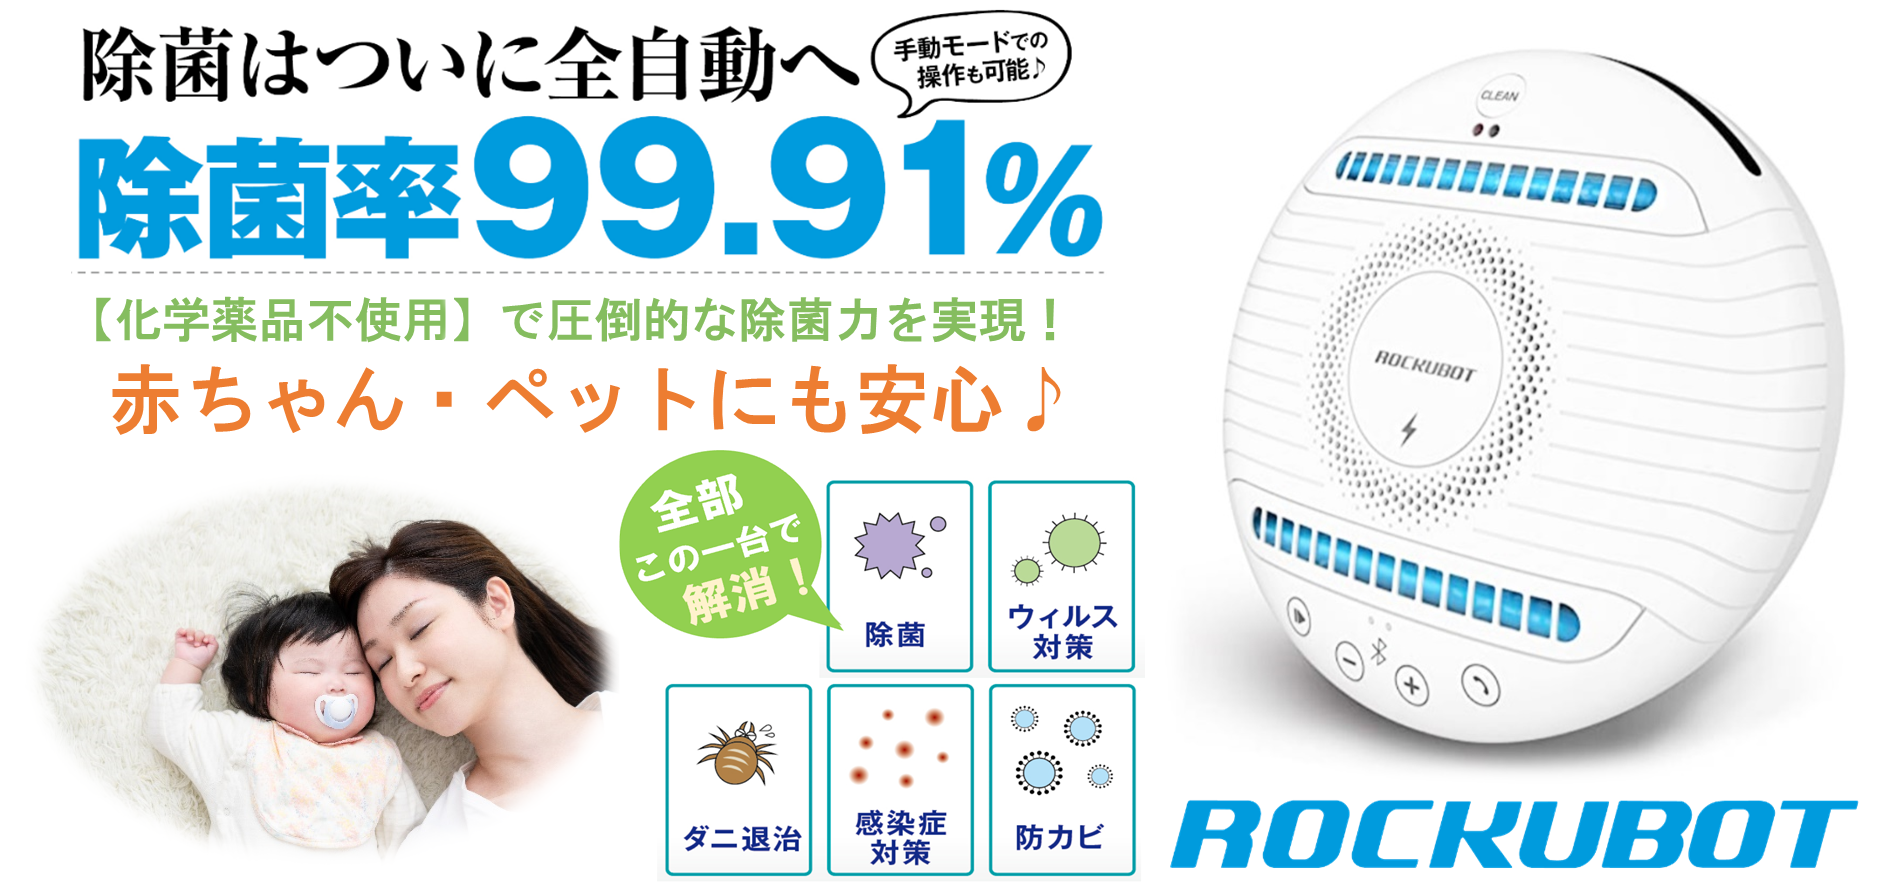 ROCKUBOT JAPAN 公式HP